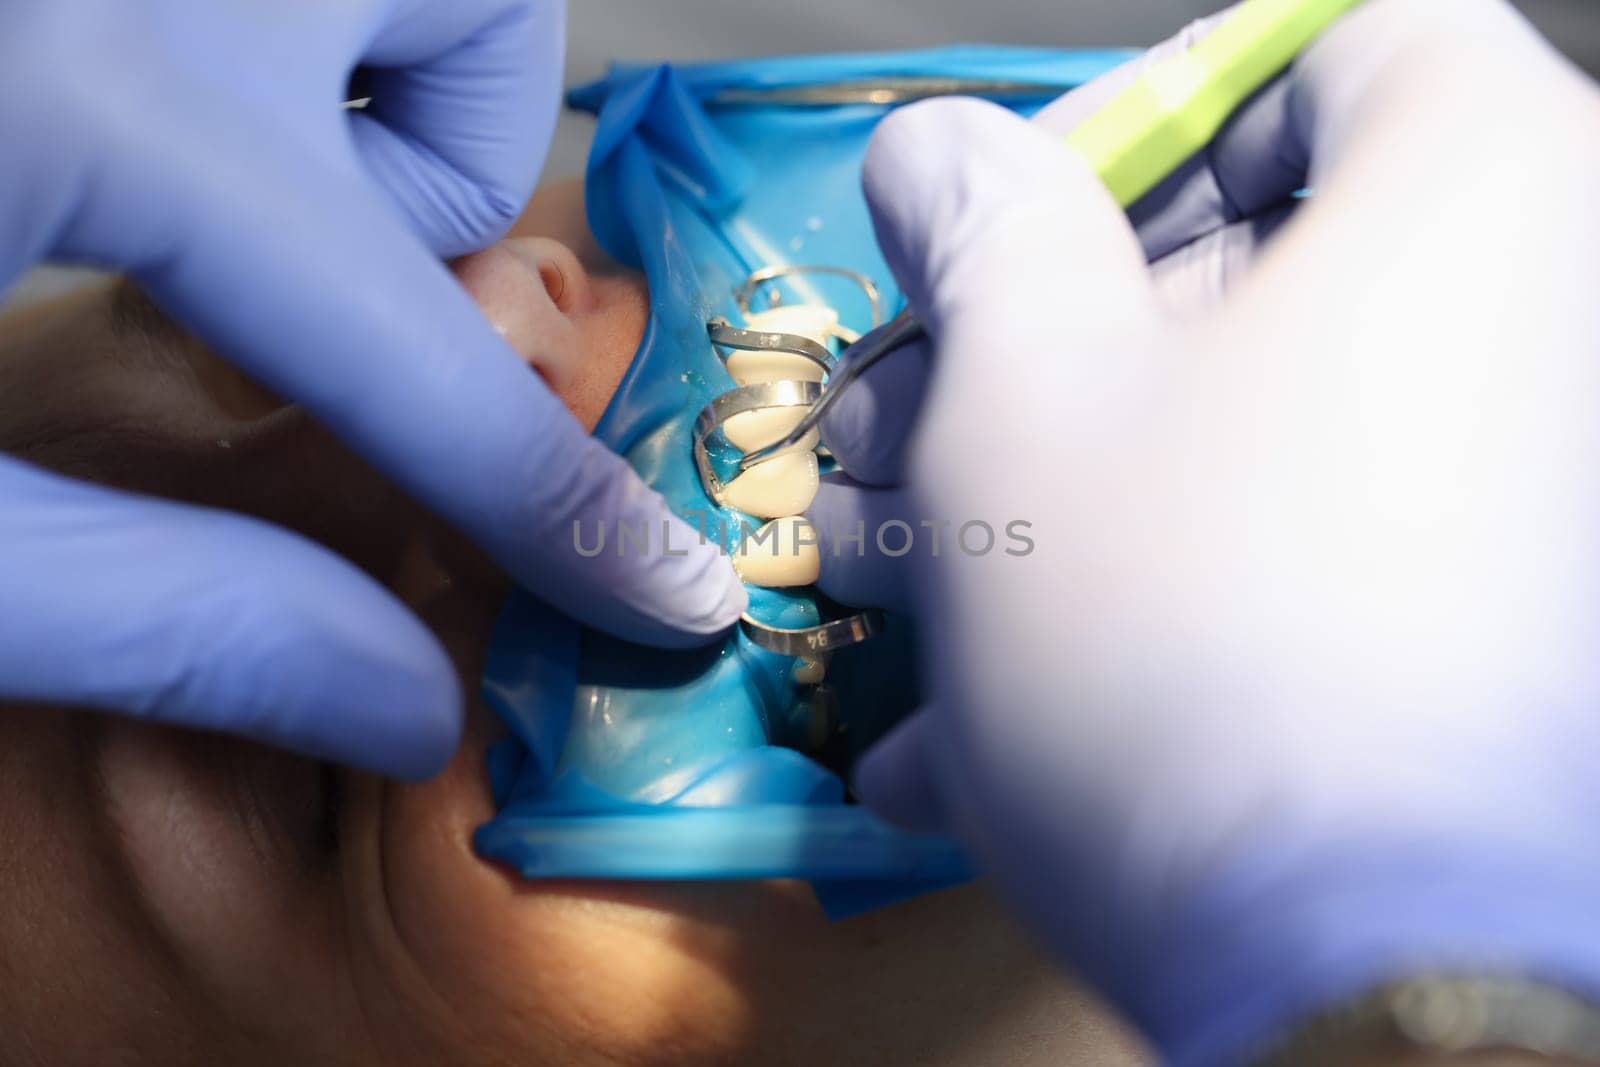 Doctor dentist fixing veneer on patient teeth using metal tools closeup. Prosthetics in dentistry concept